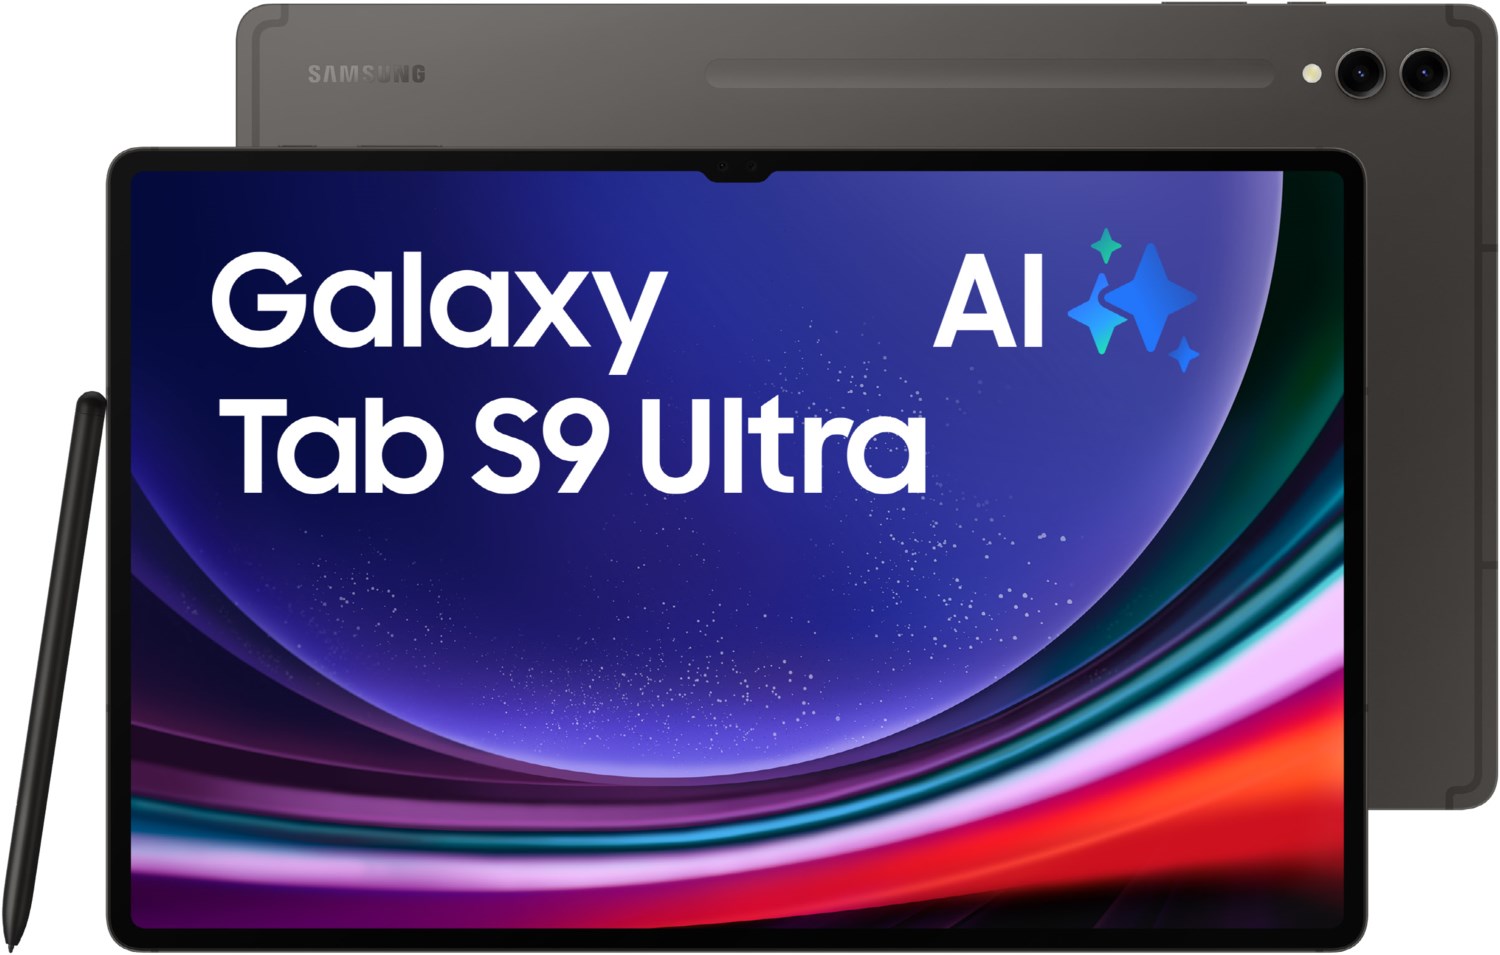 Galaxy Tab S9 Ultra (256GB) WiFi Tablet graphit